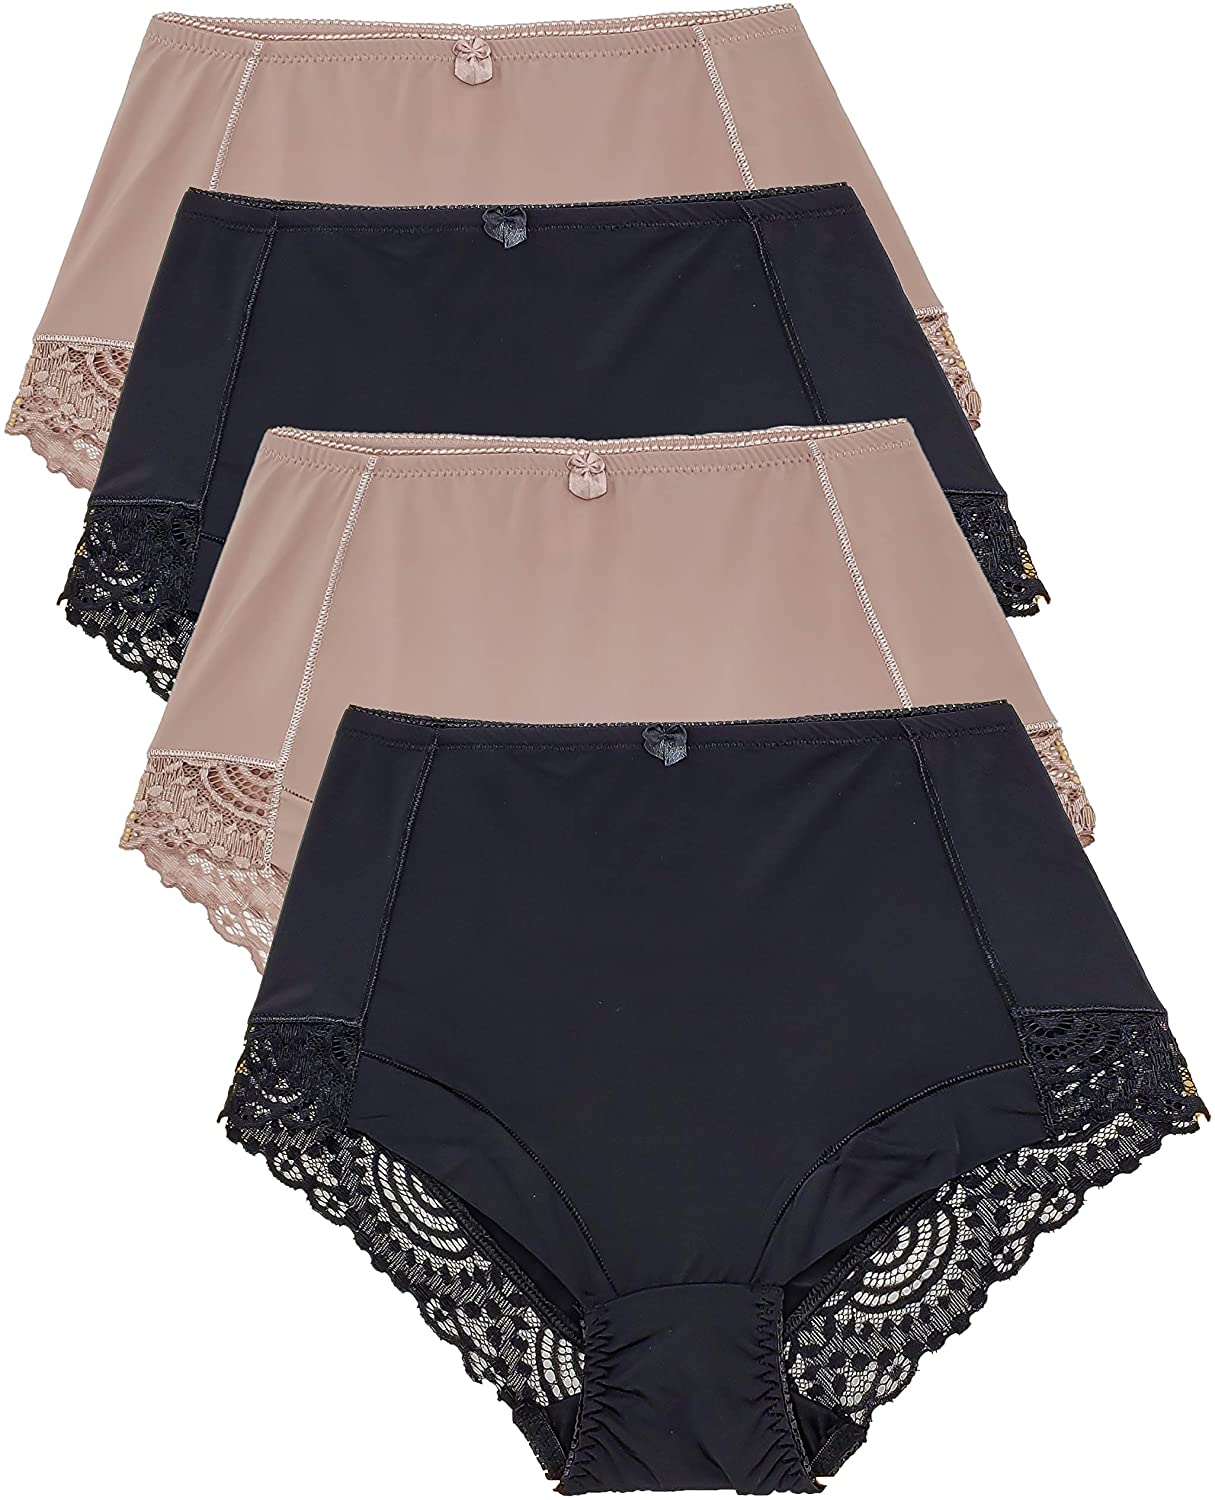 Barbra Lingerie Underwear Women - Seamless No-Show Turkey